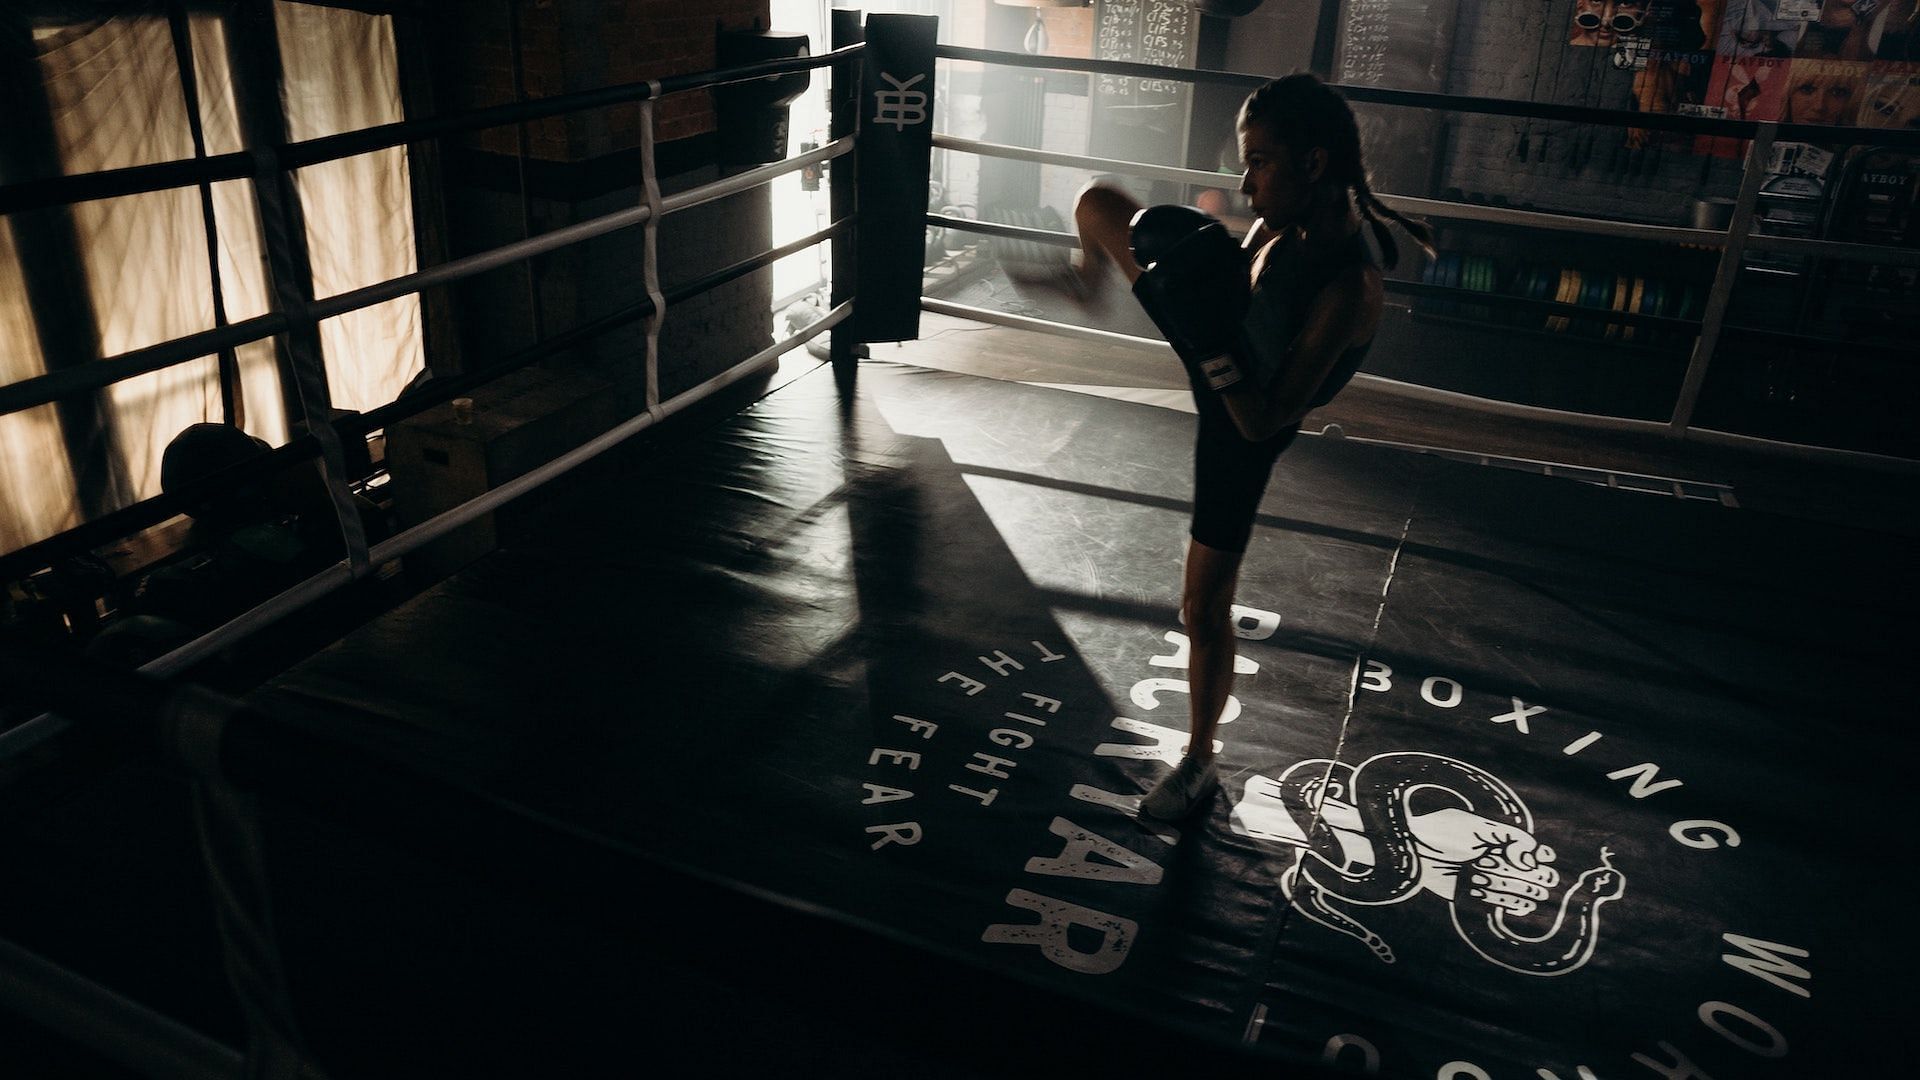 Shadow boxing. Image via Pexels/cottonbro